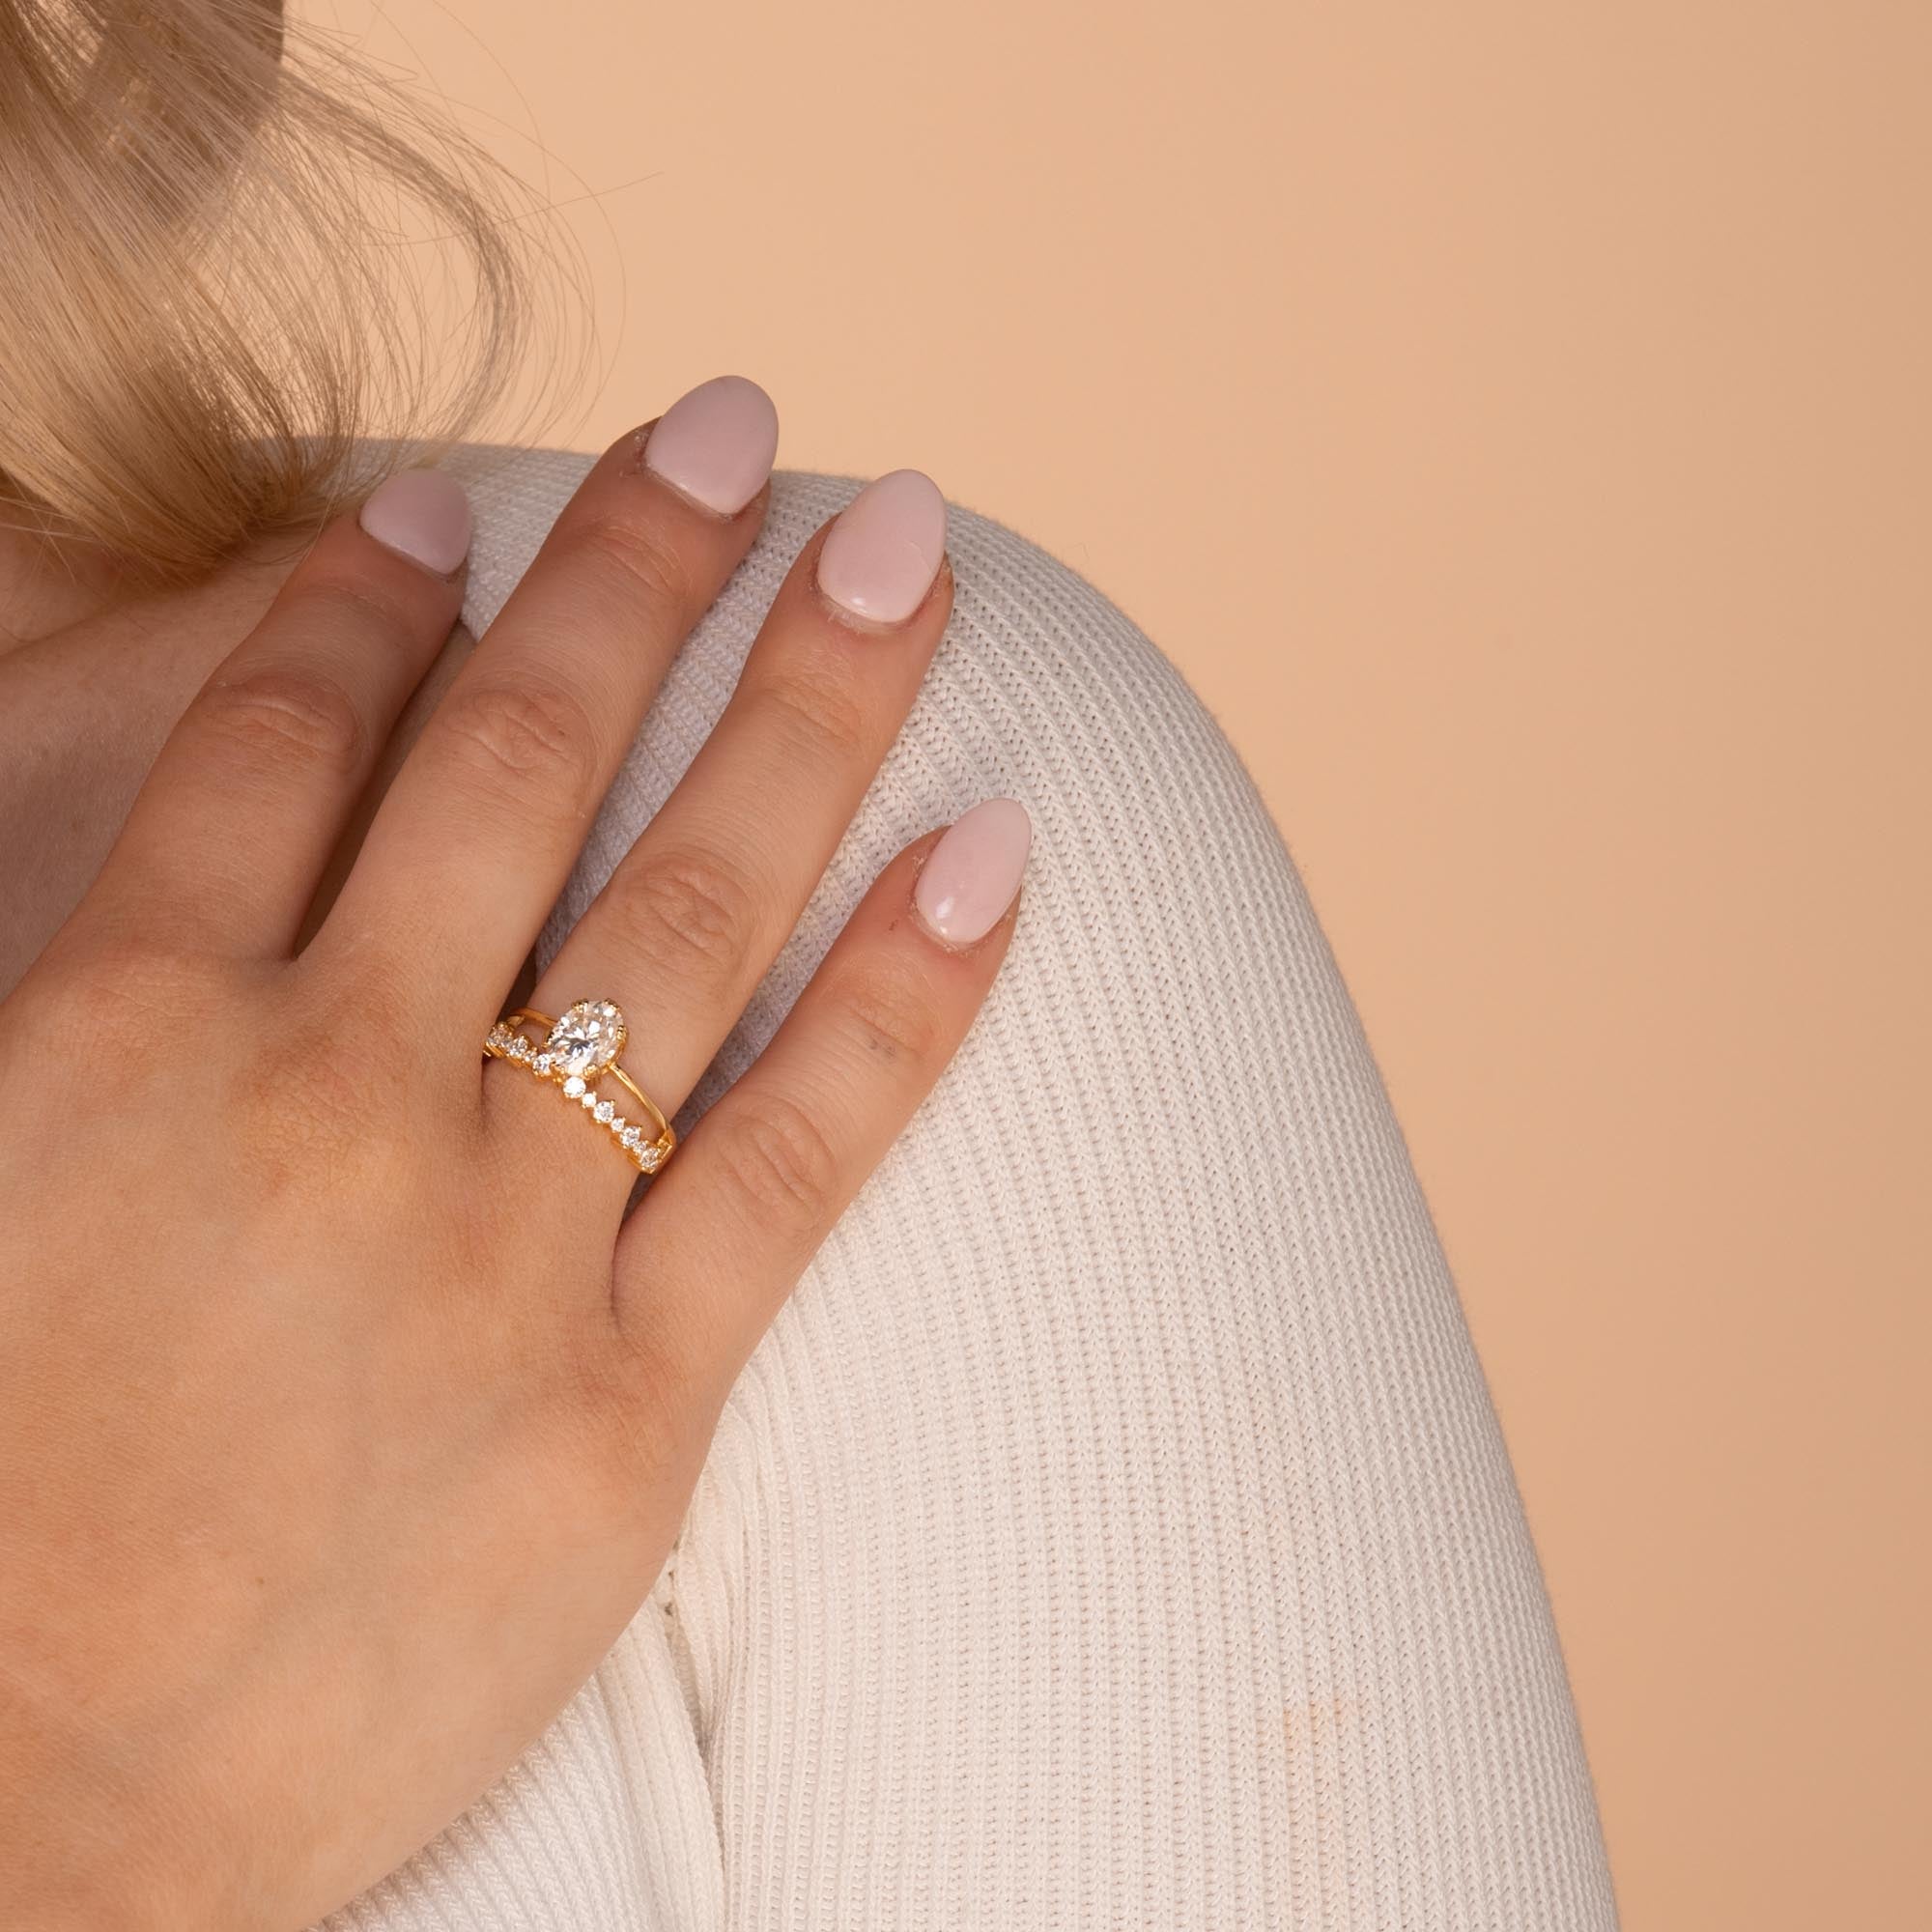 1.5 ct The Willow Moissanite Diamond Engagement Ring